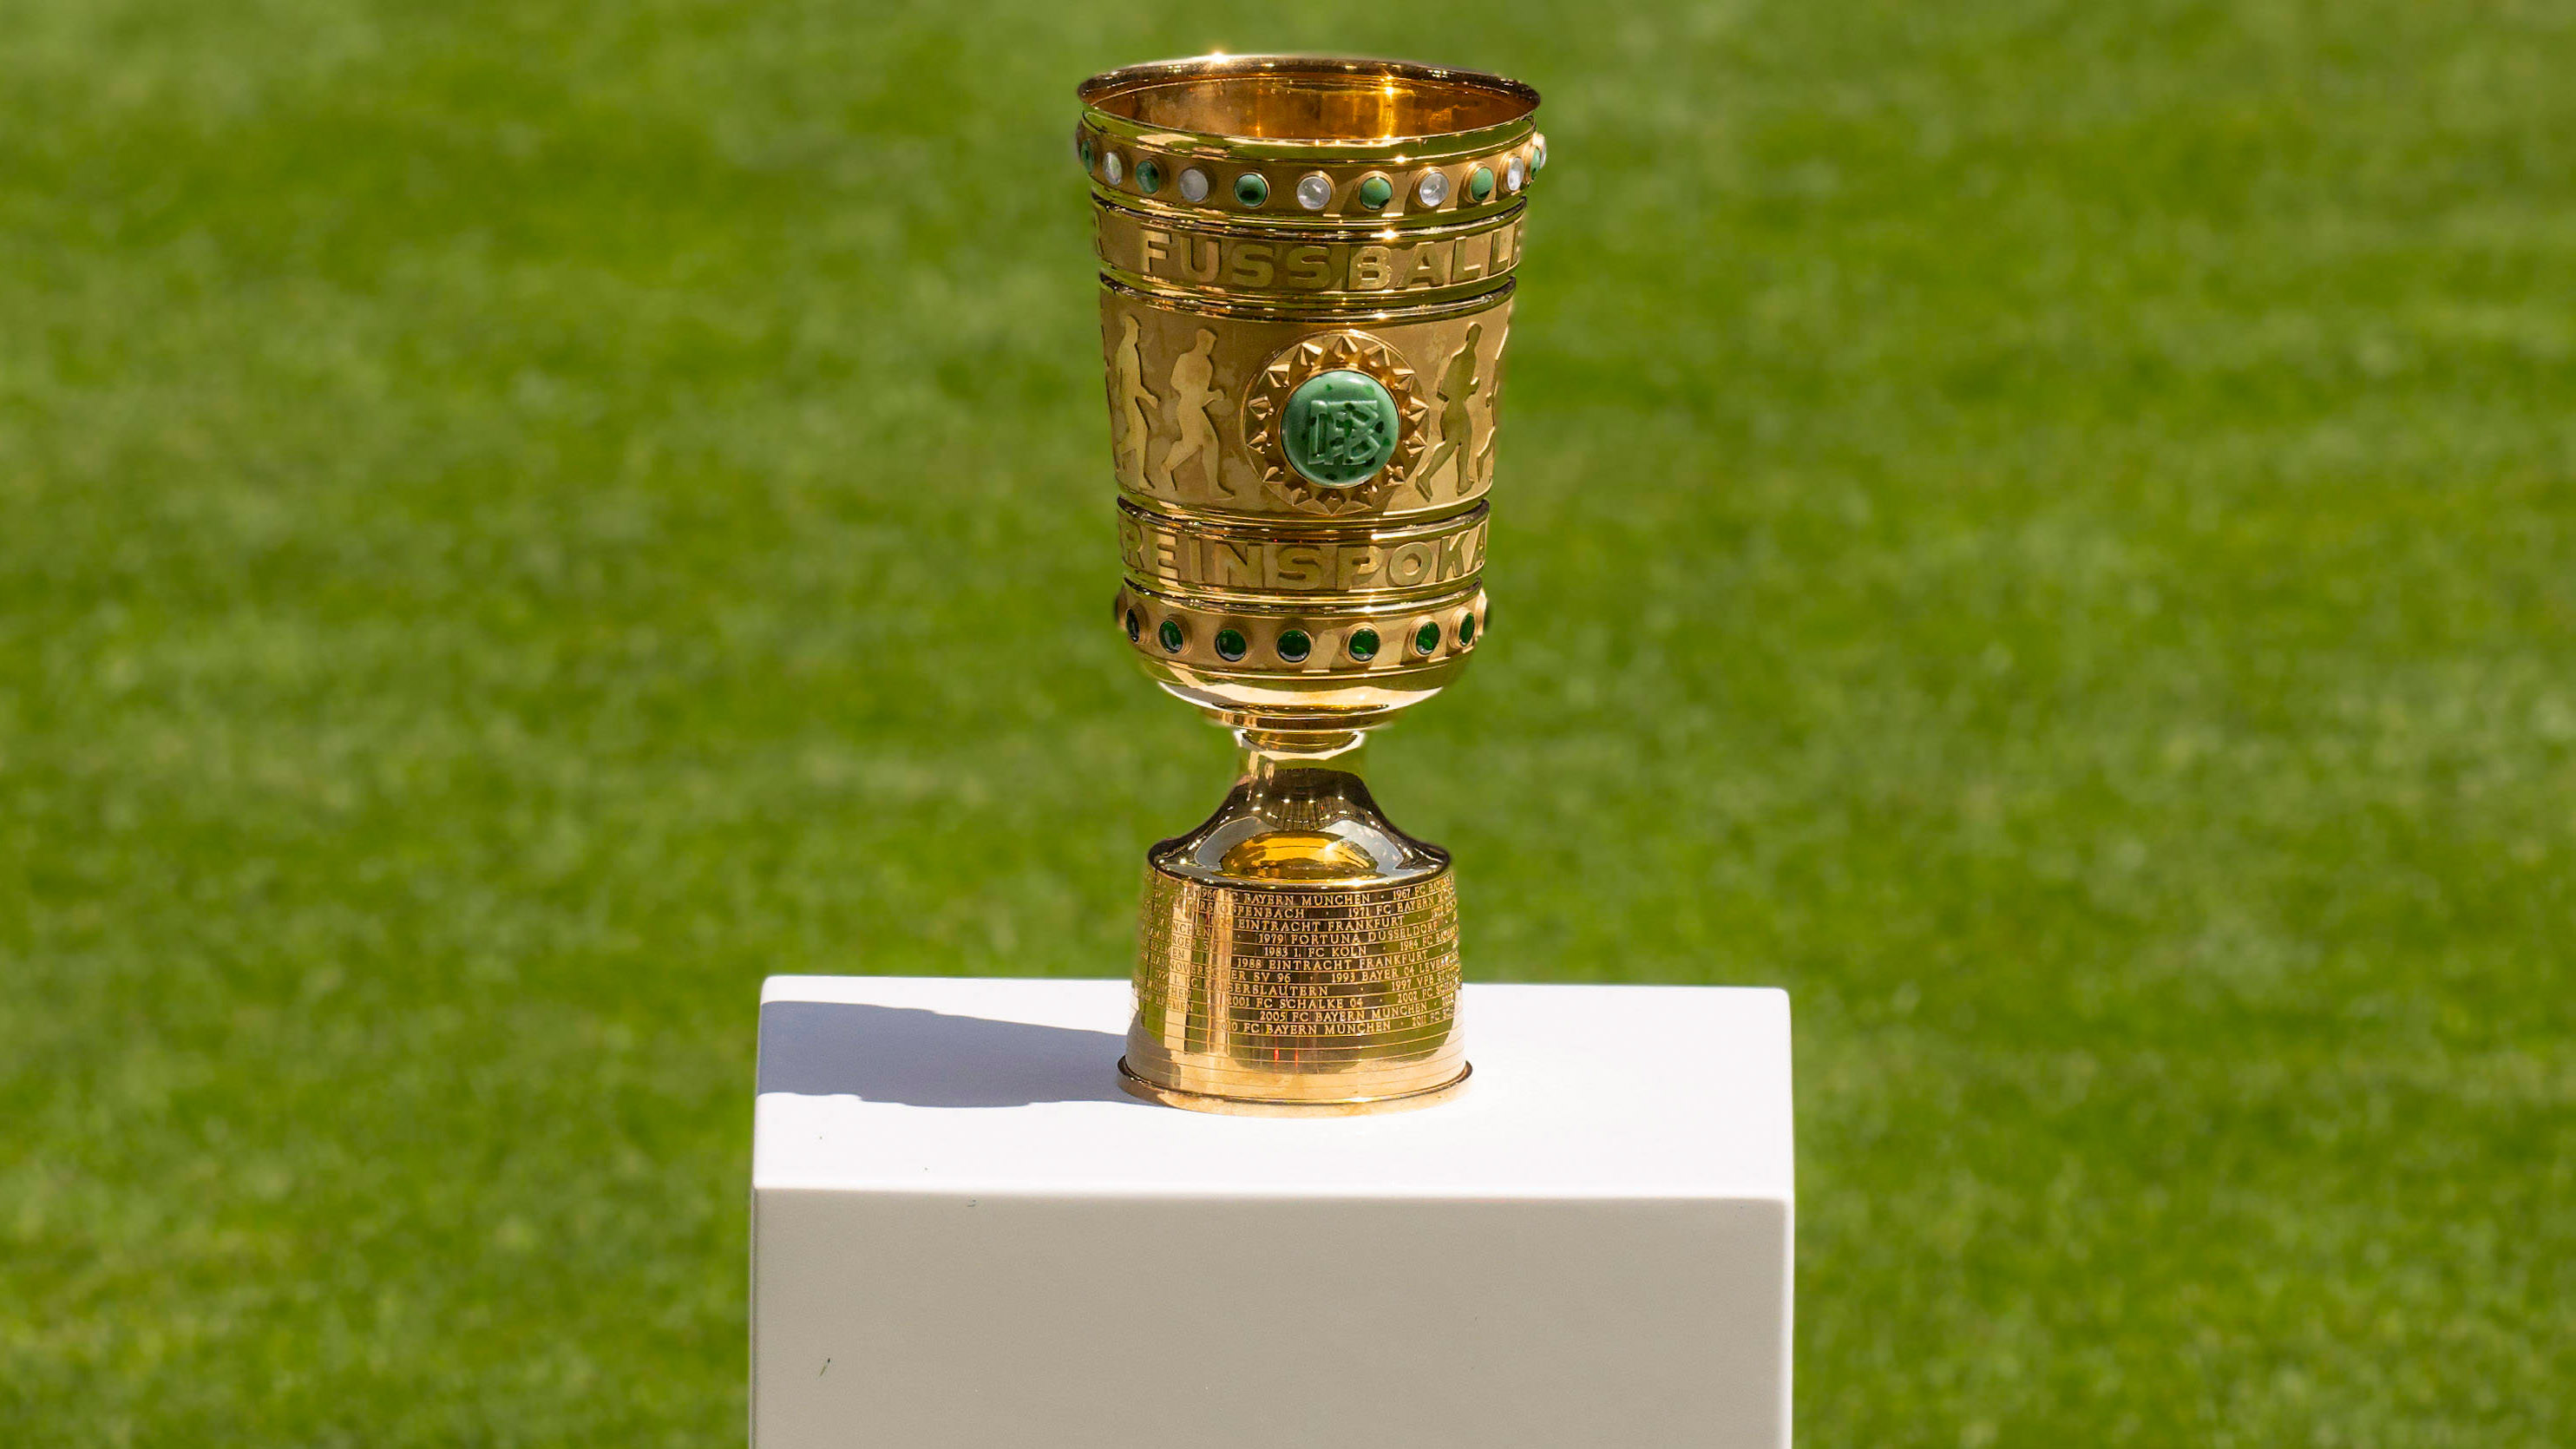 DFB-Pokal 1